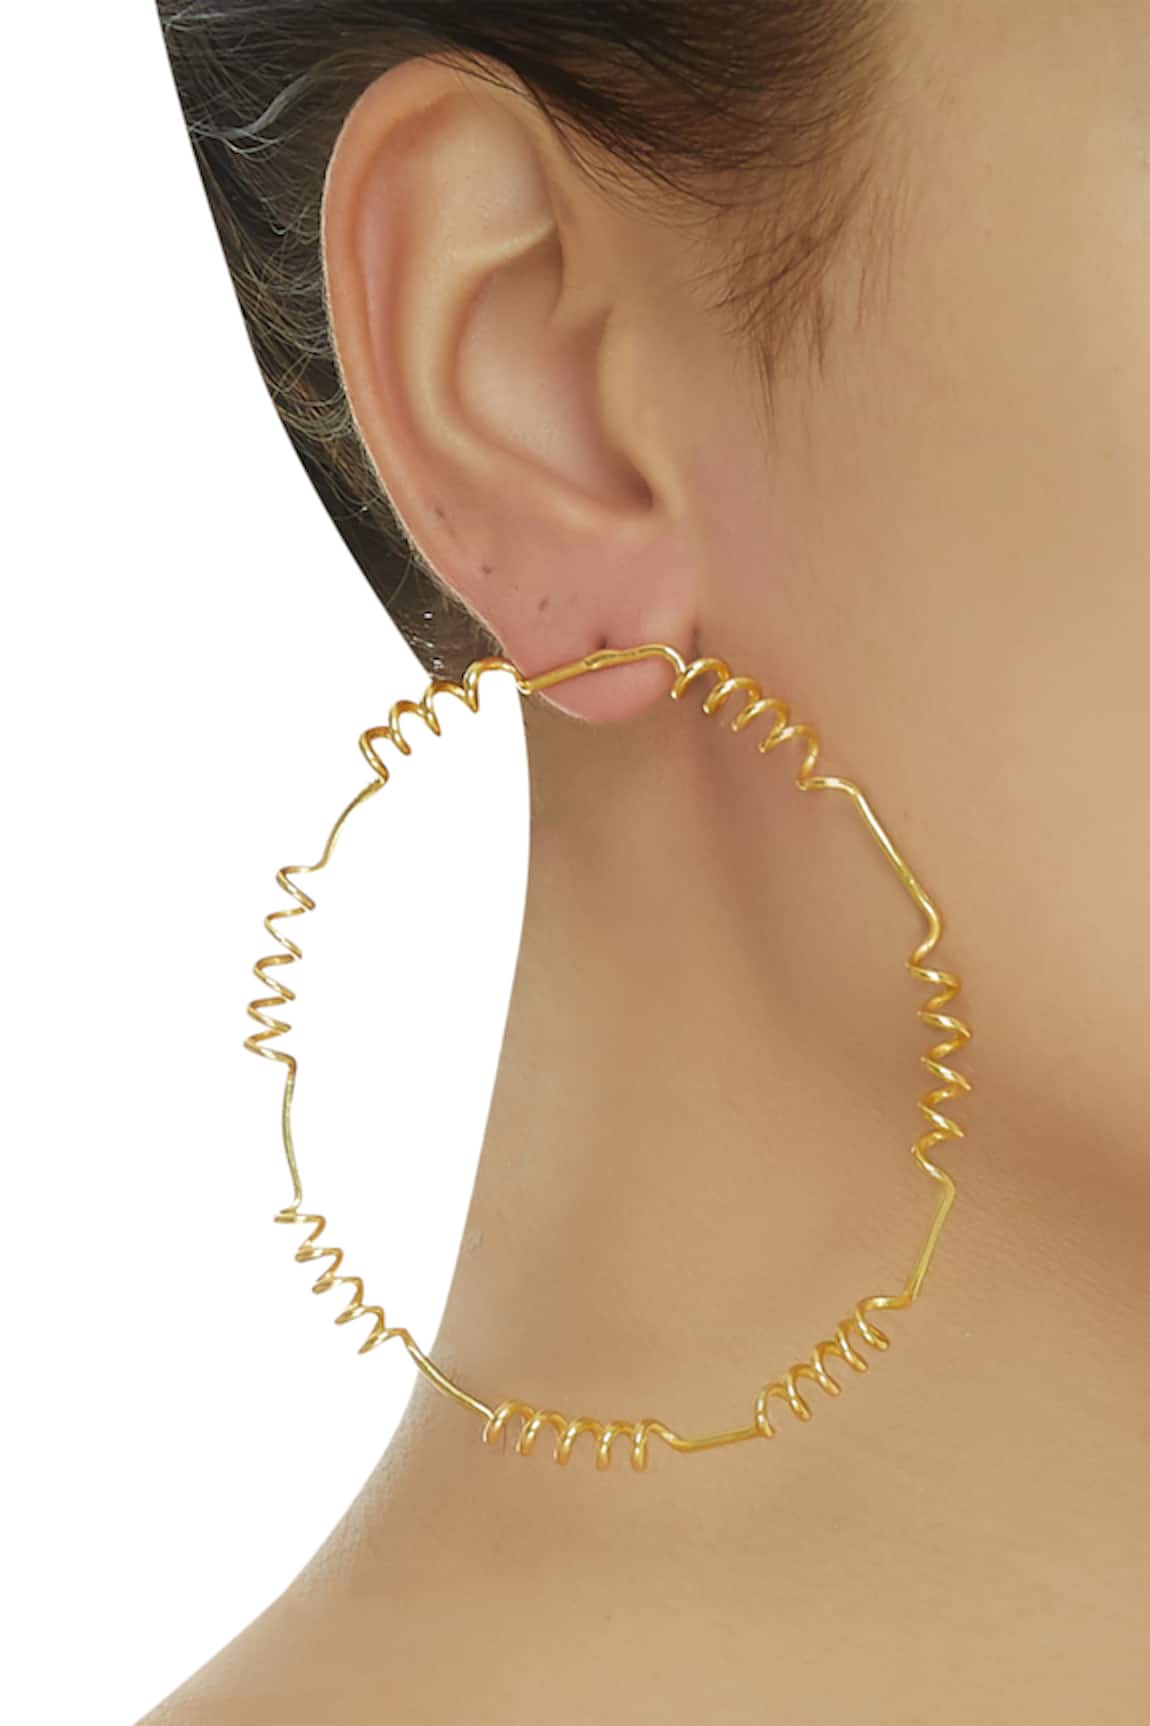 Eurumme Spring style circular earrings